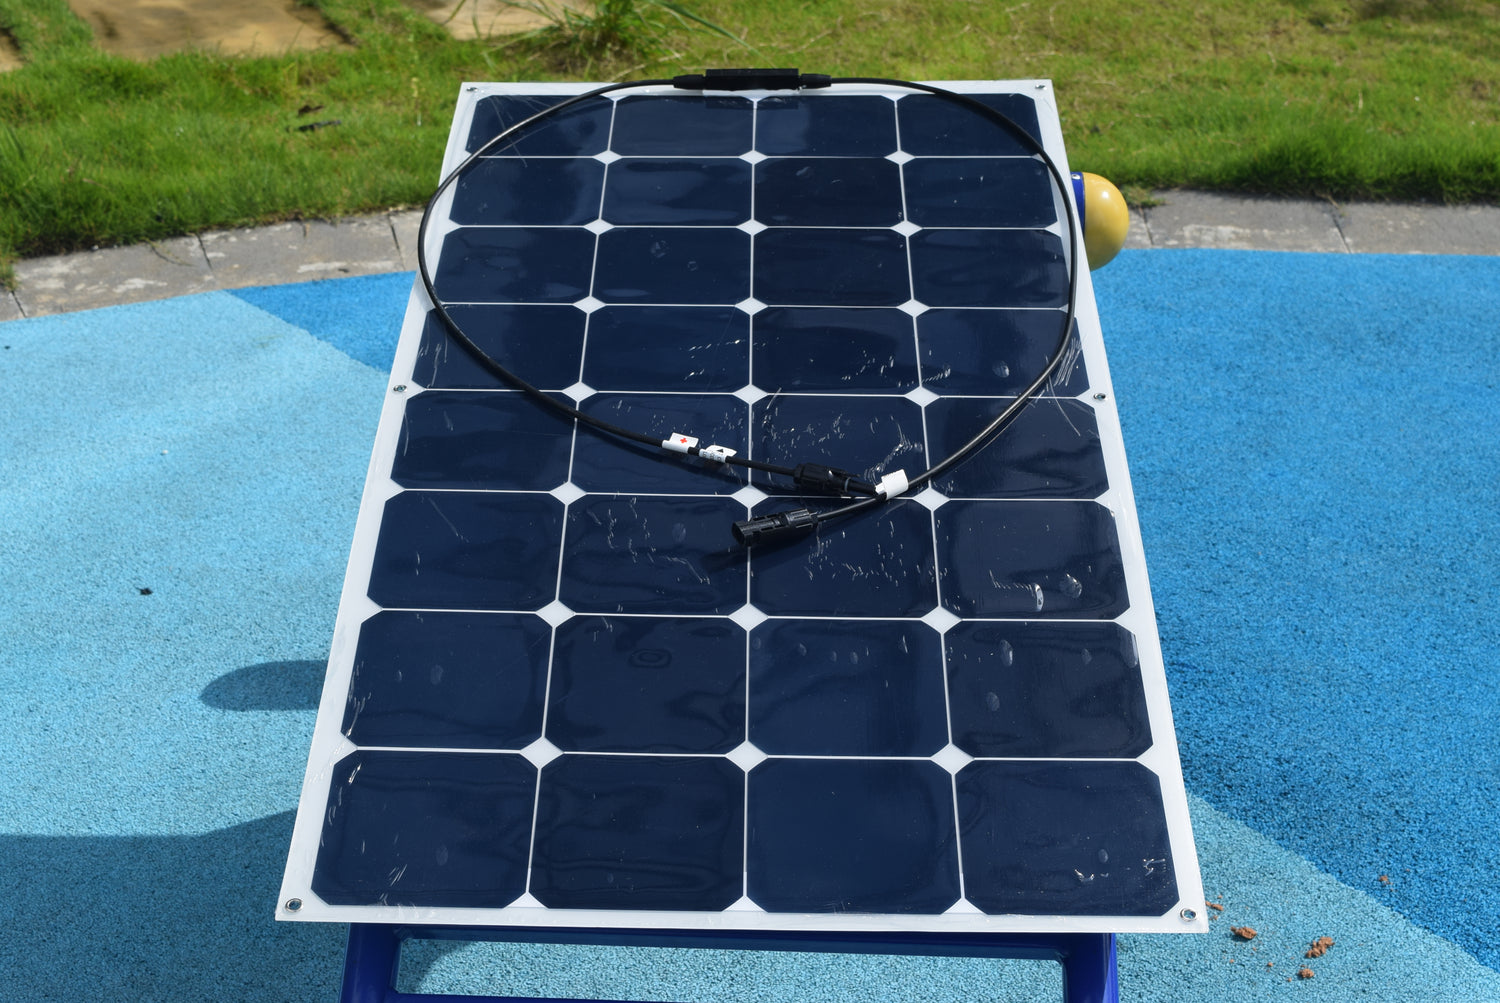 AGA-SOLAR Submits Application for 150MW Solar Park in Albania